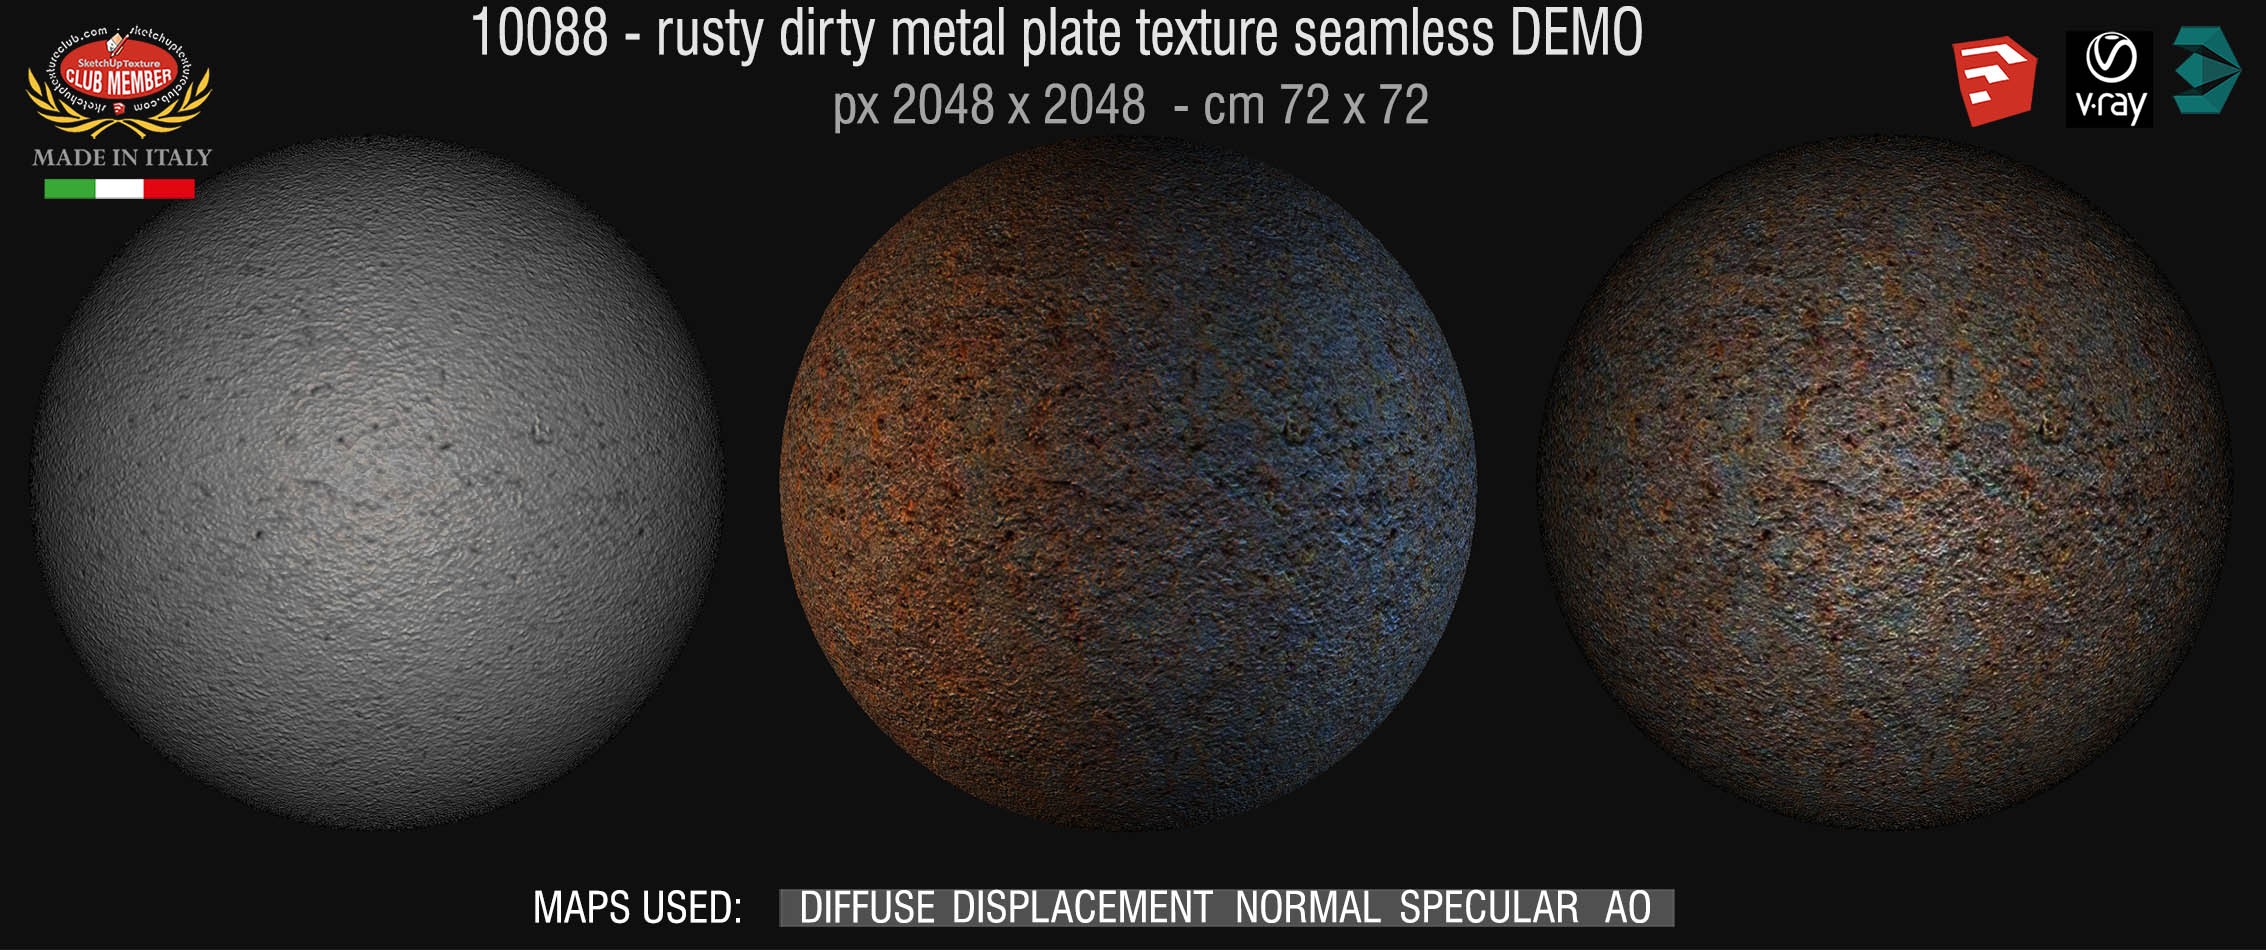 10088 HR Rusty dirty metal texture seamless + maps DEMO